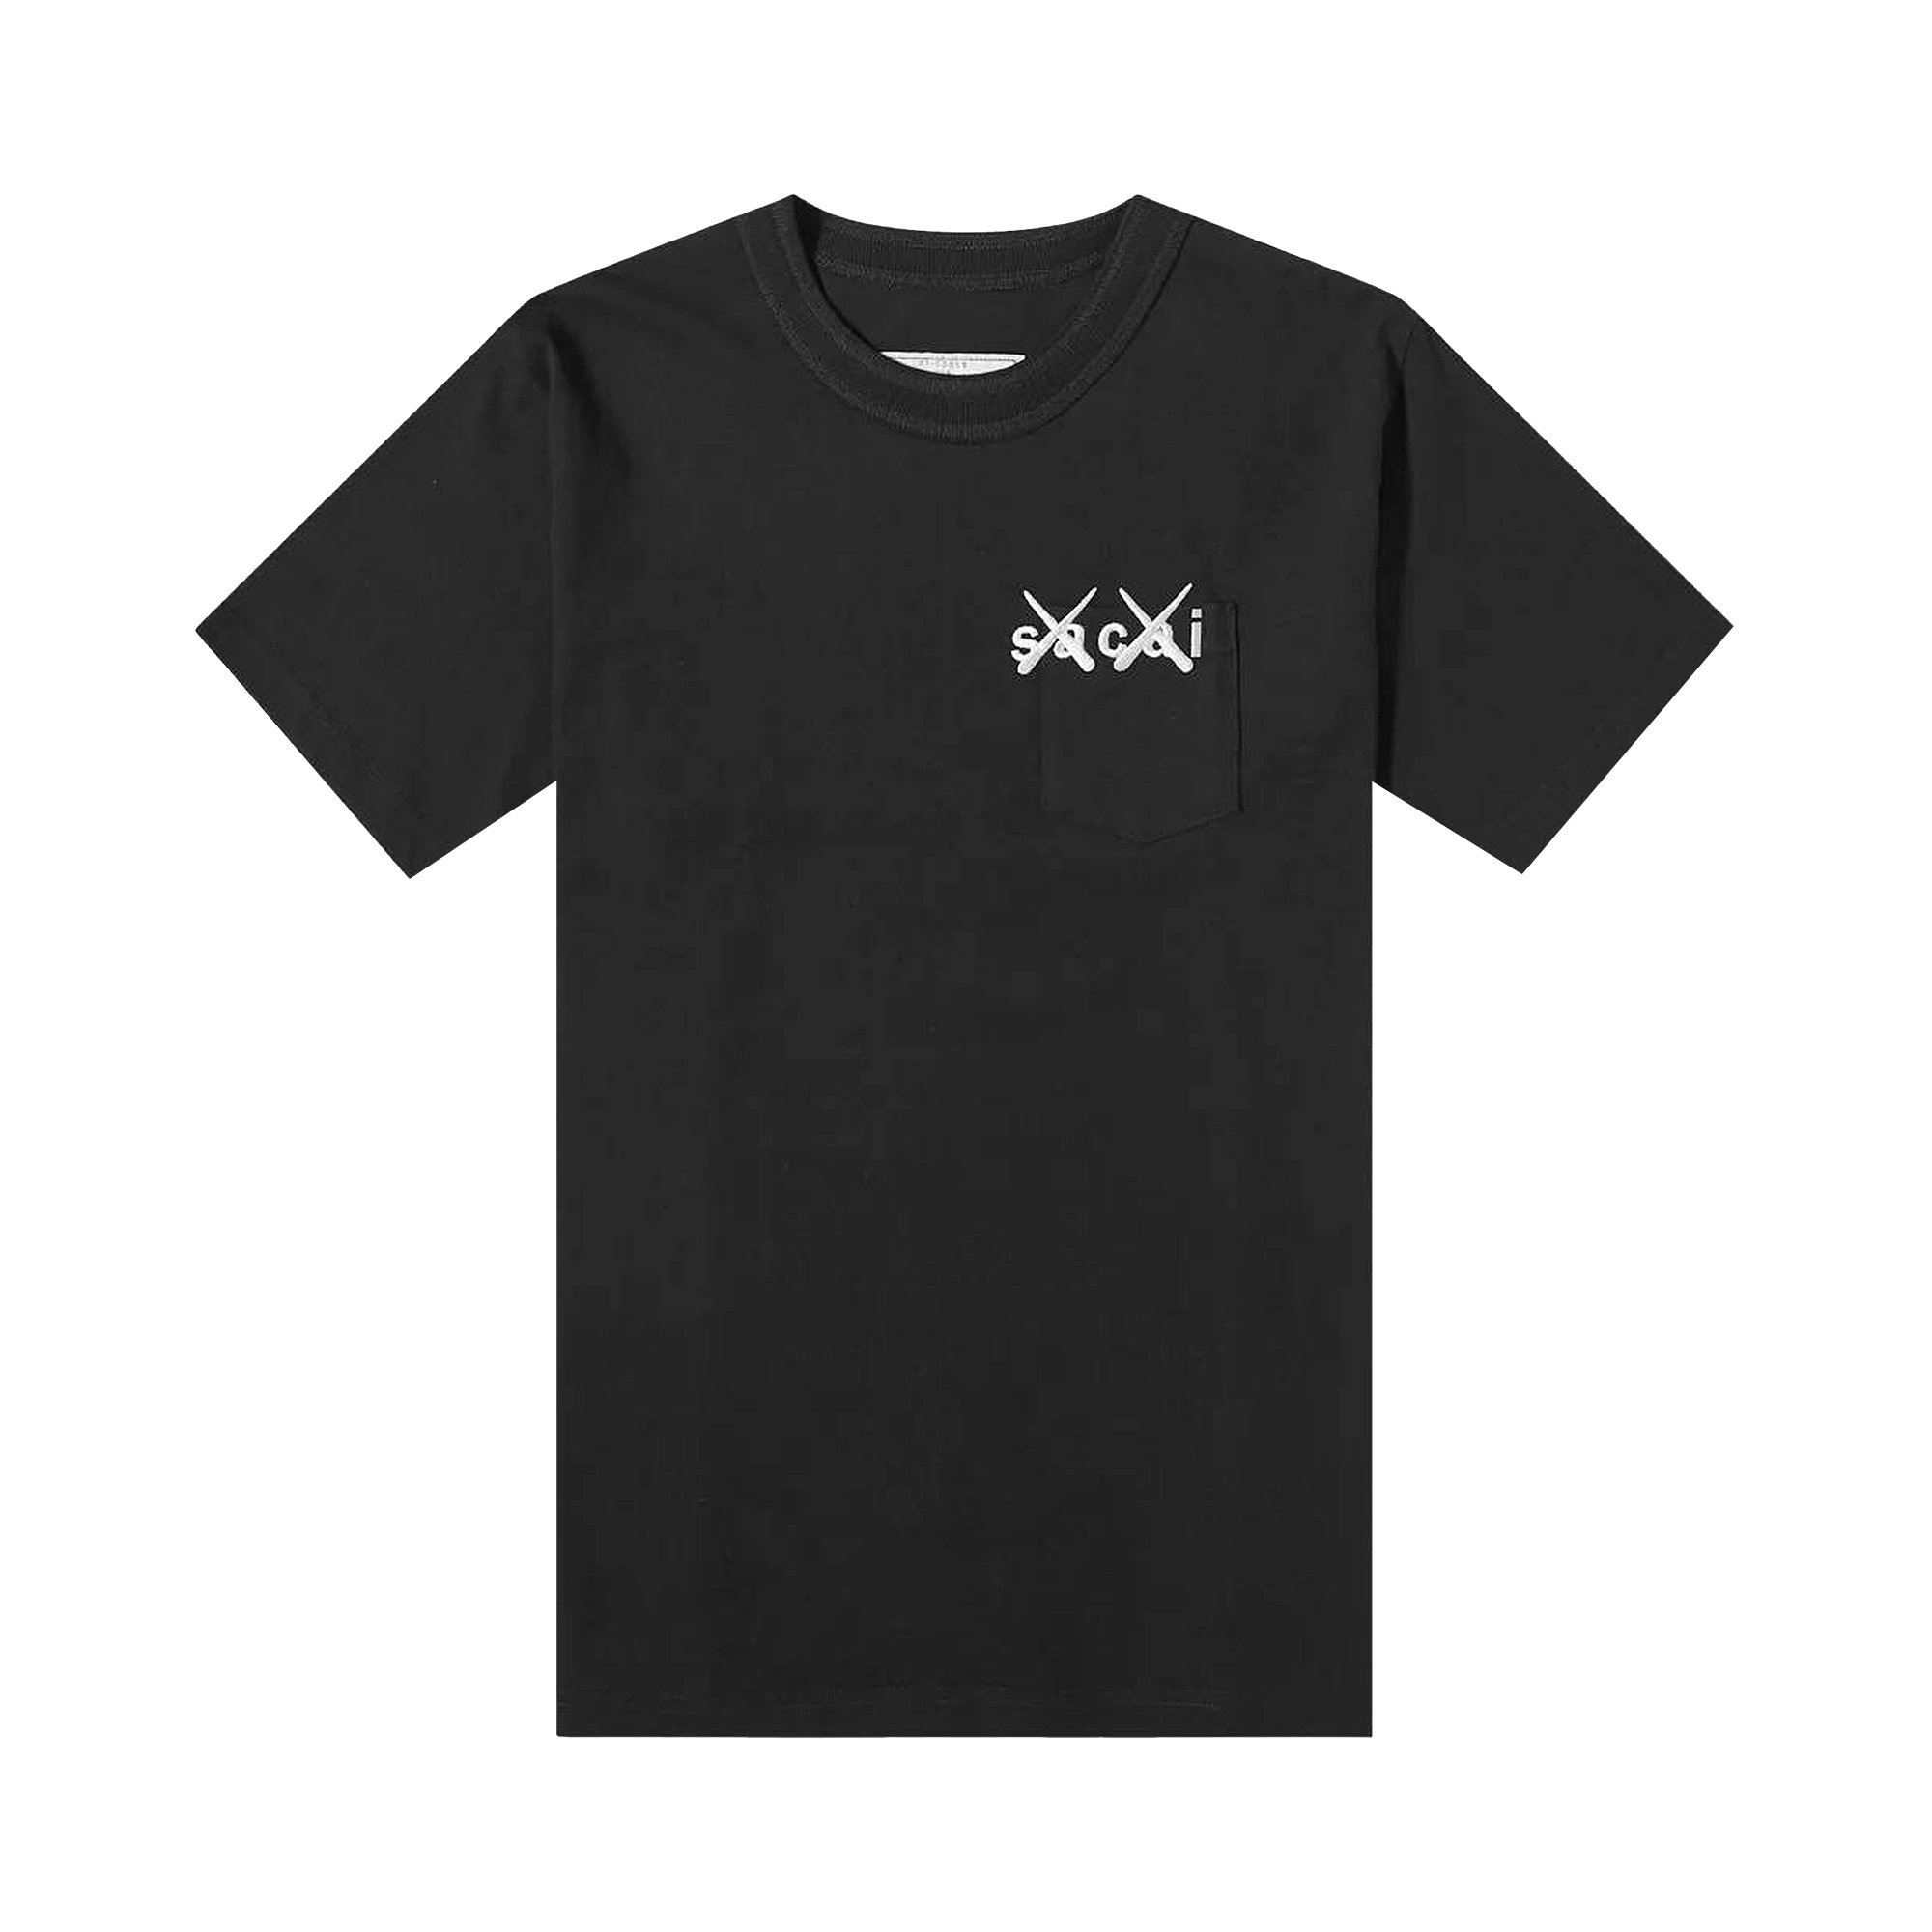 Buy Sacai x KAWS Embroidery T-Shirt 'Black/White' - 21 0285S 003 